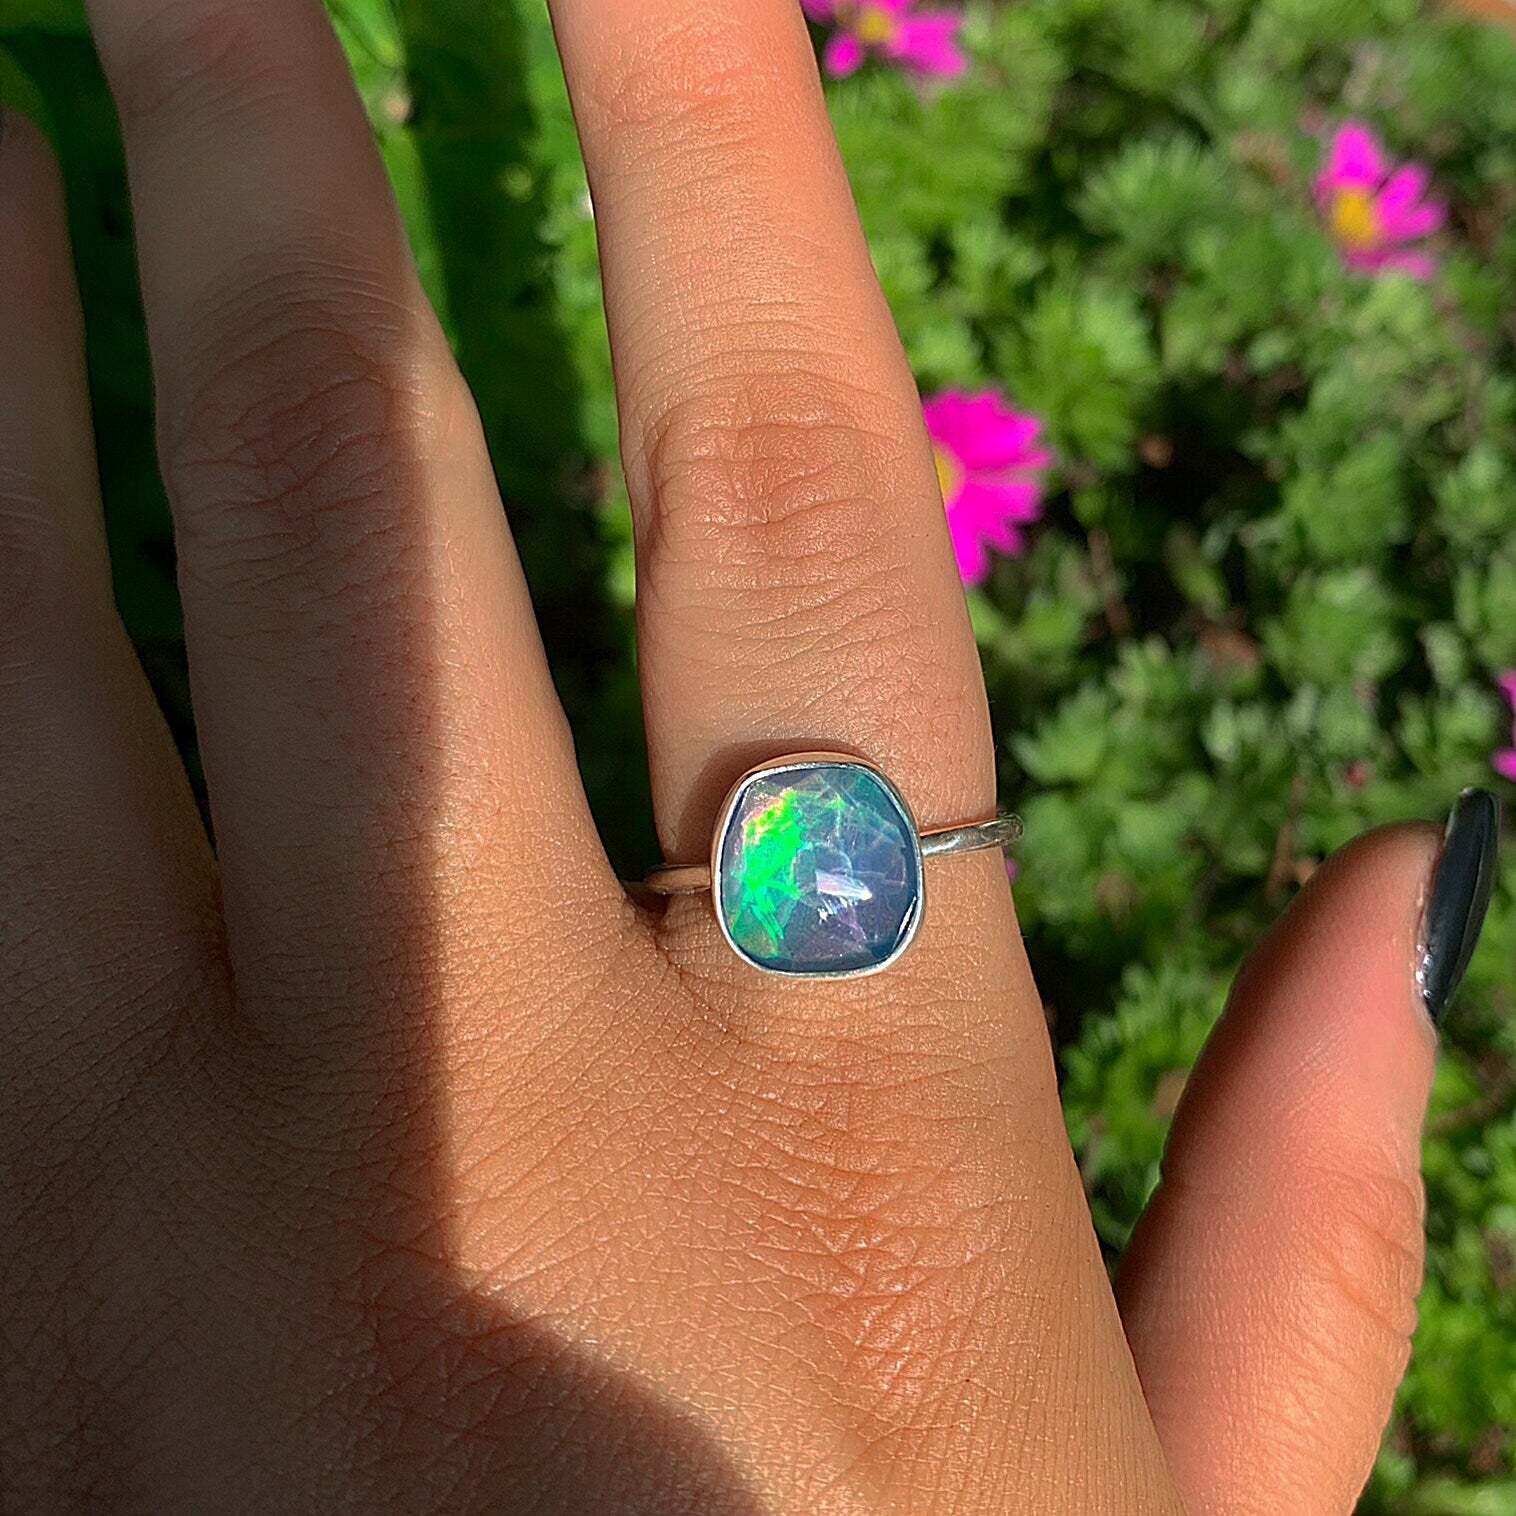 Rose Cut Clear Quartz & Aurora Opal Ring - Size 9 - Sterling Silver - Rainbow Opal Jewelry, Dainty Aurora Opal - Faceted Rainbow Crystal